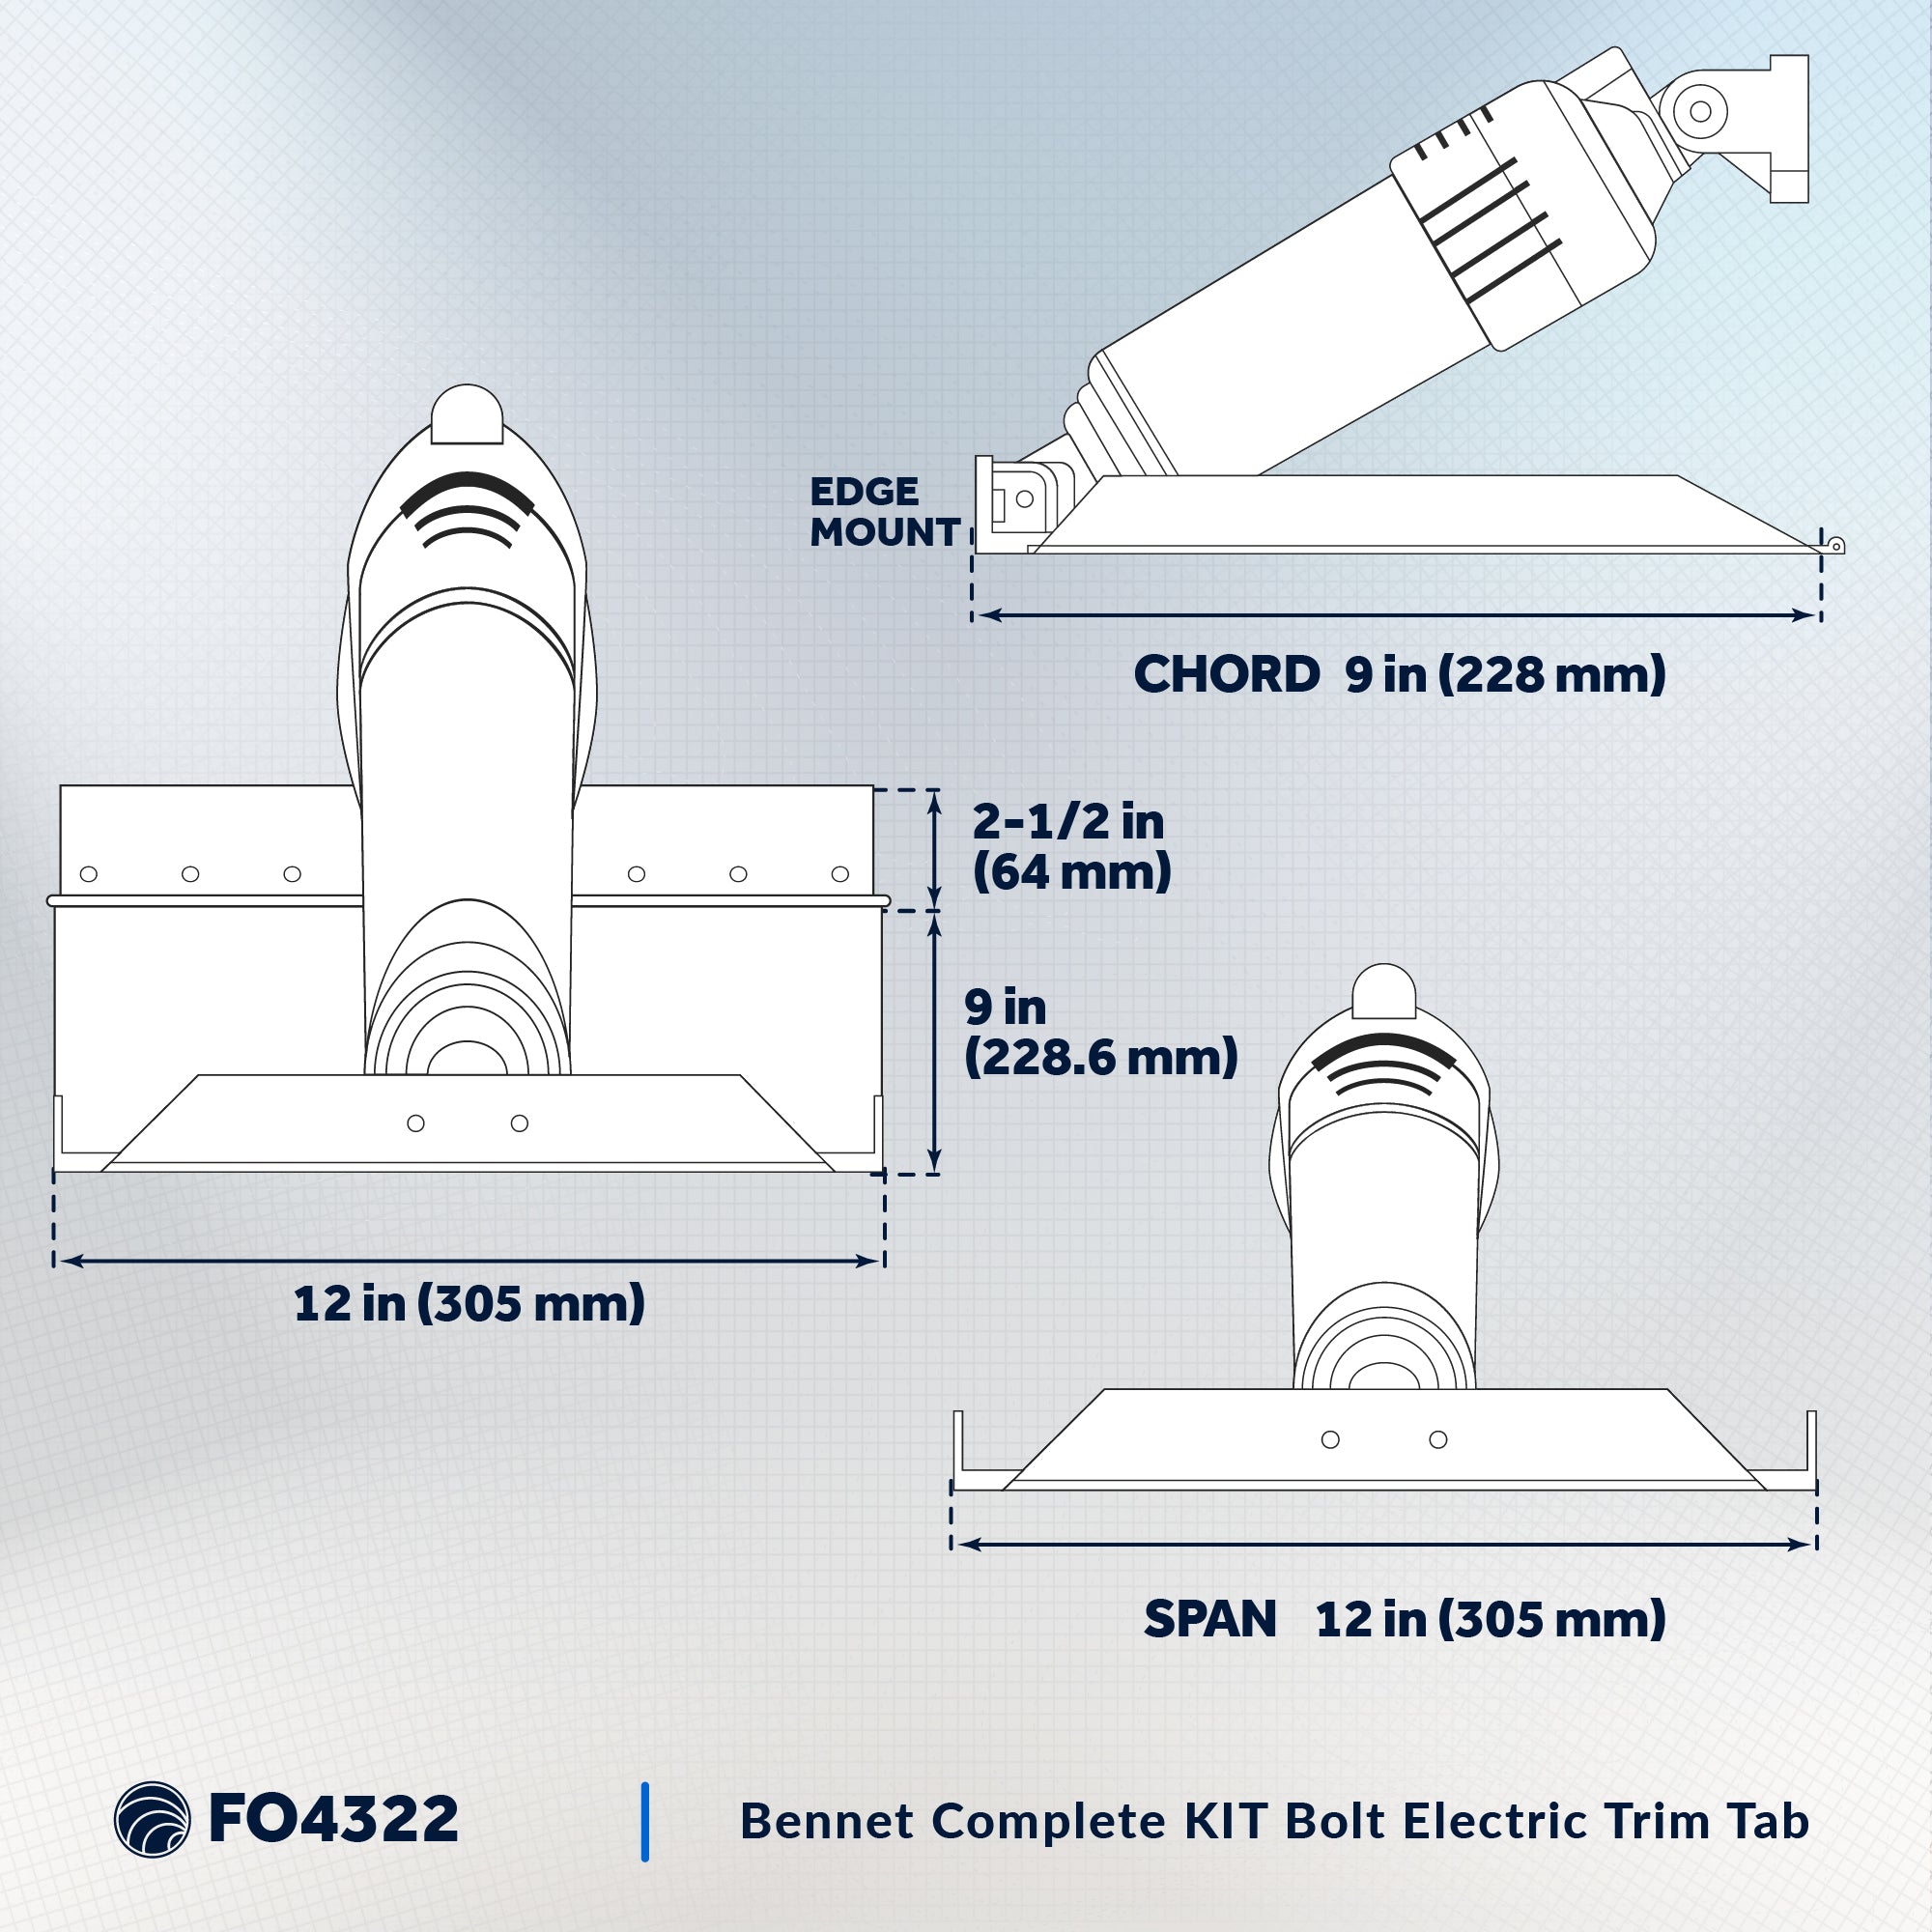 Bolt Electric Trim Tab System 12" x 9", Complete Kit BOLT129, 12V DC - FO4322